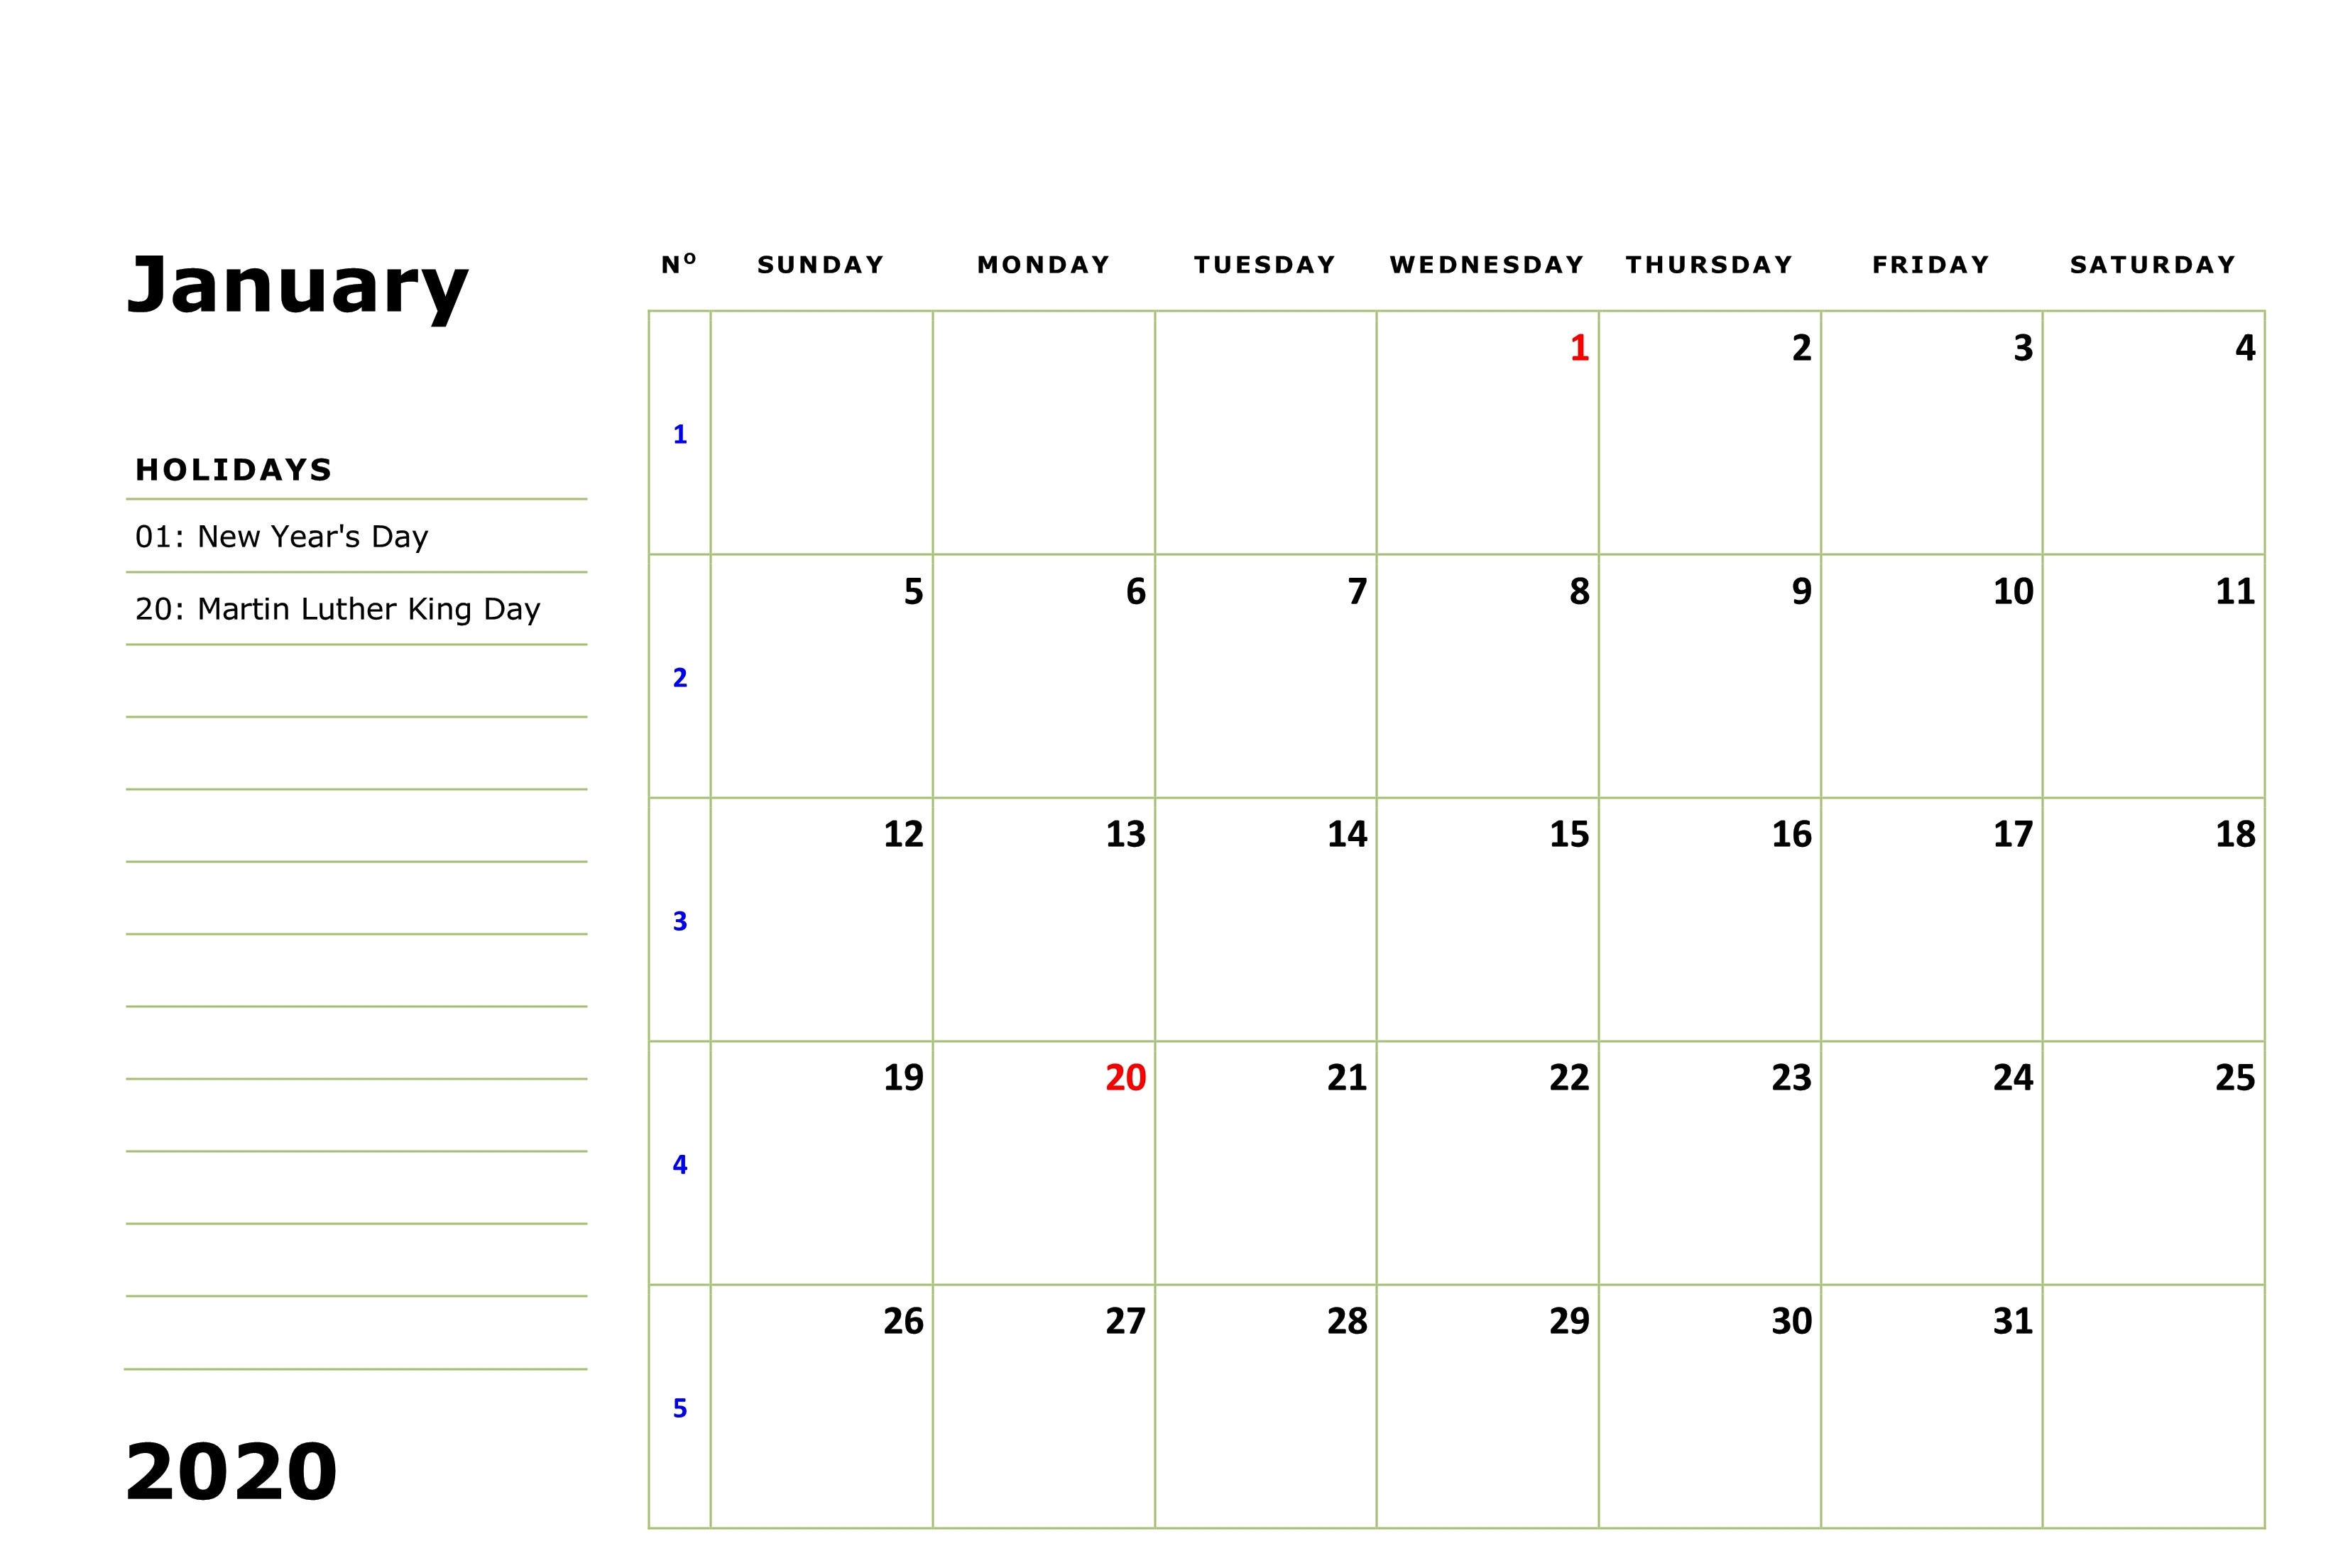 January 2020 Calendar Holidays